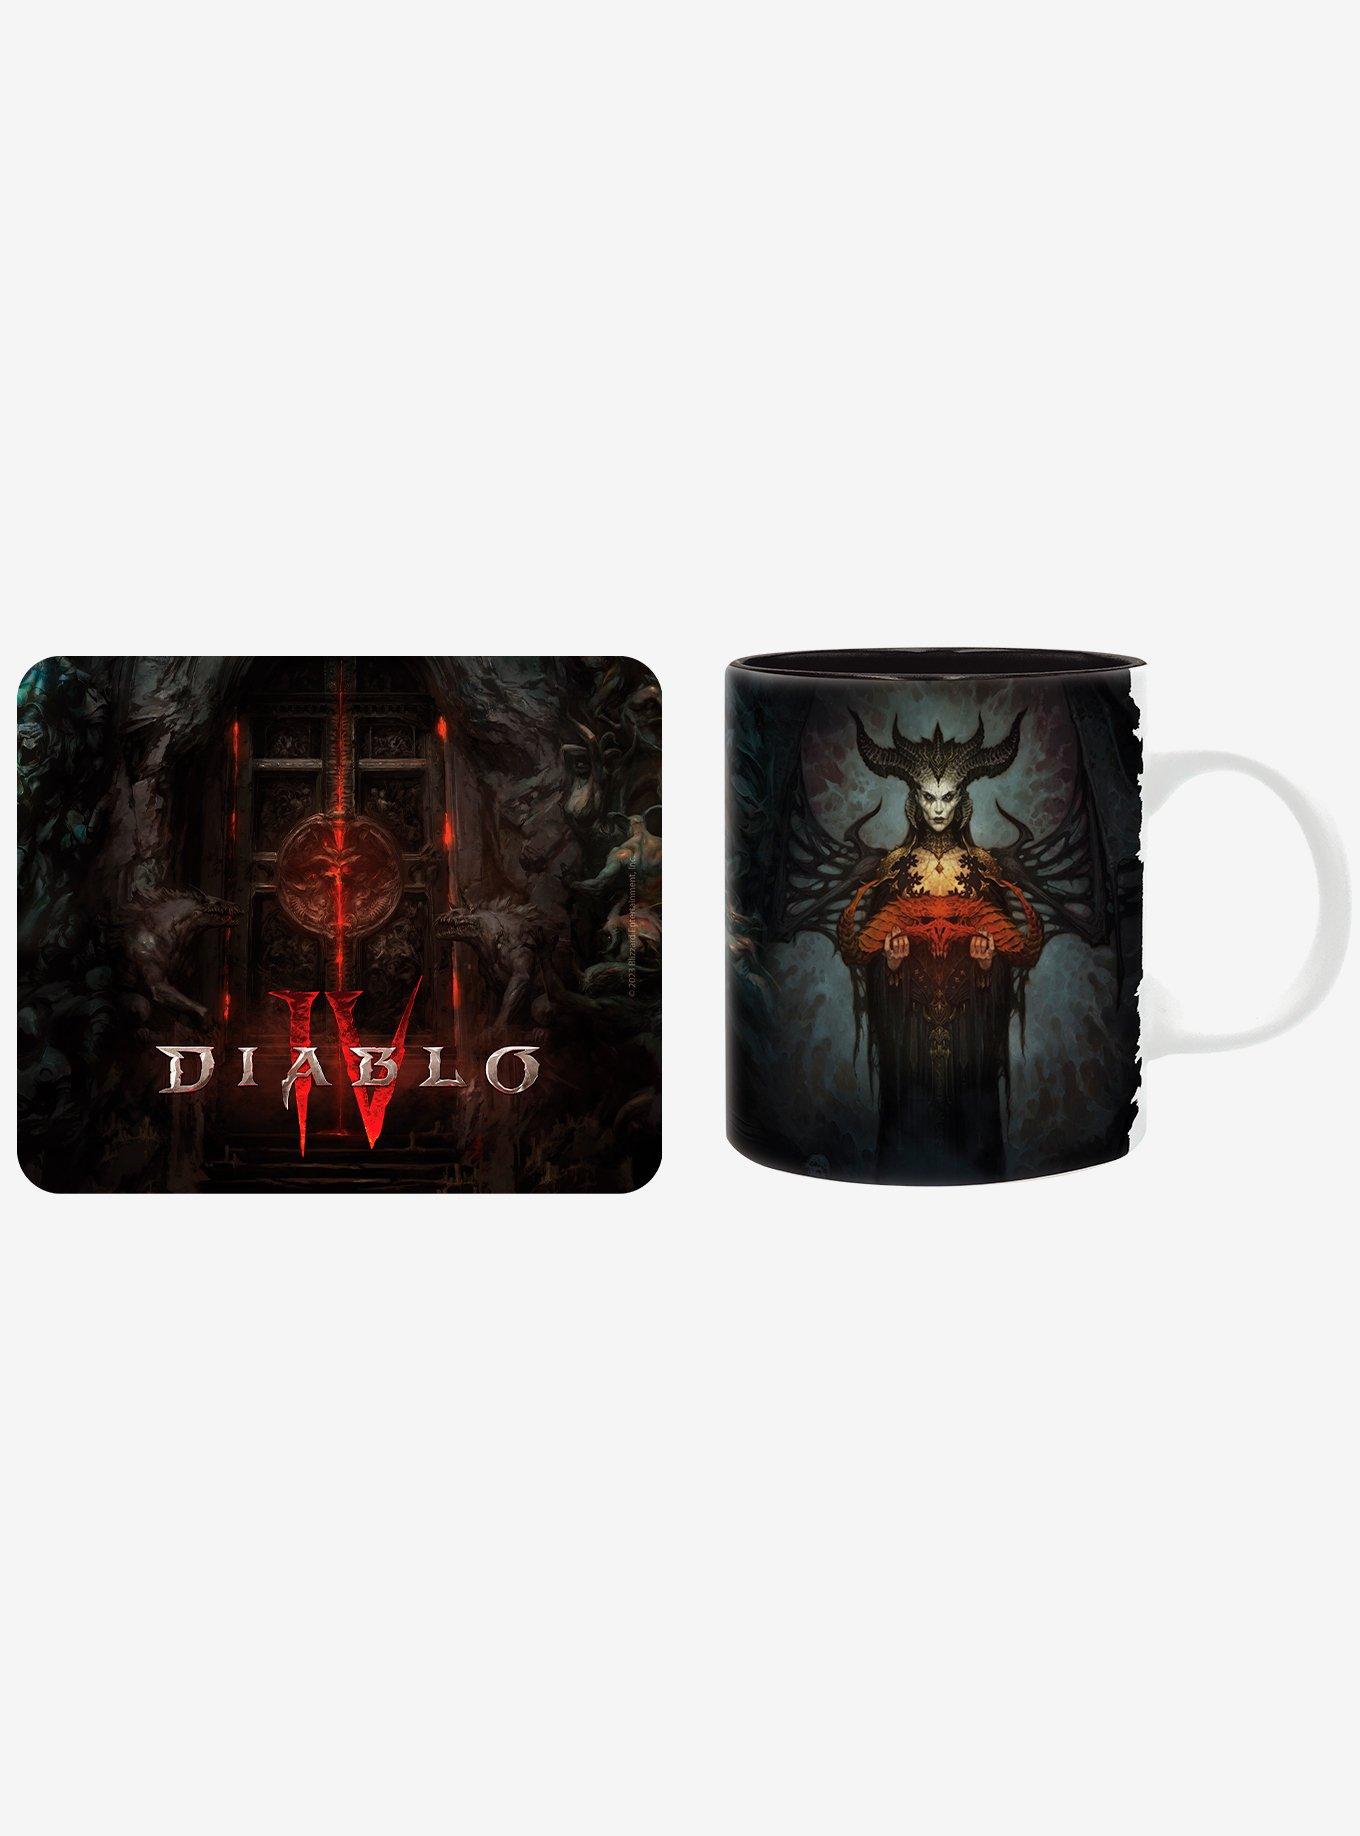 Diablo Mousepad and Mug Bundle